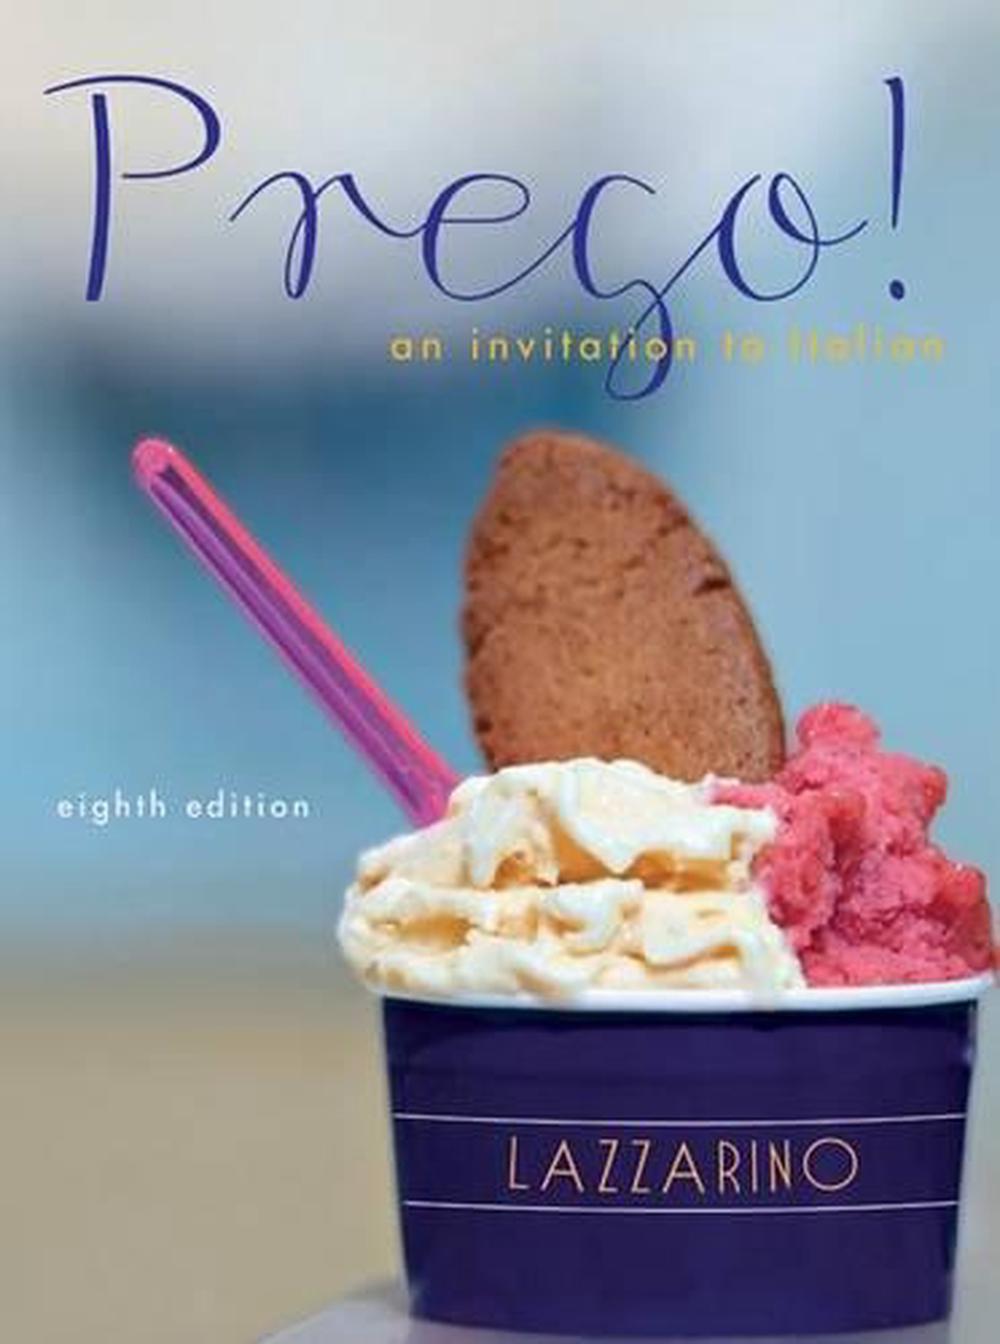 Prego! An Invitation to Italian With Wblm, 8th Edition by Graziana Lazzarino, Hardcover